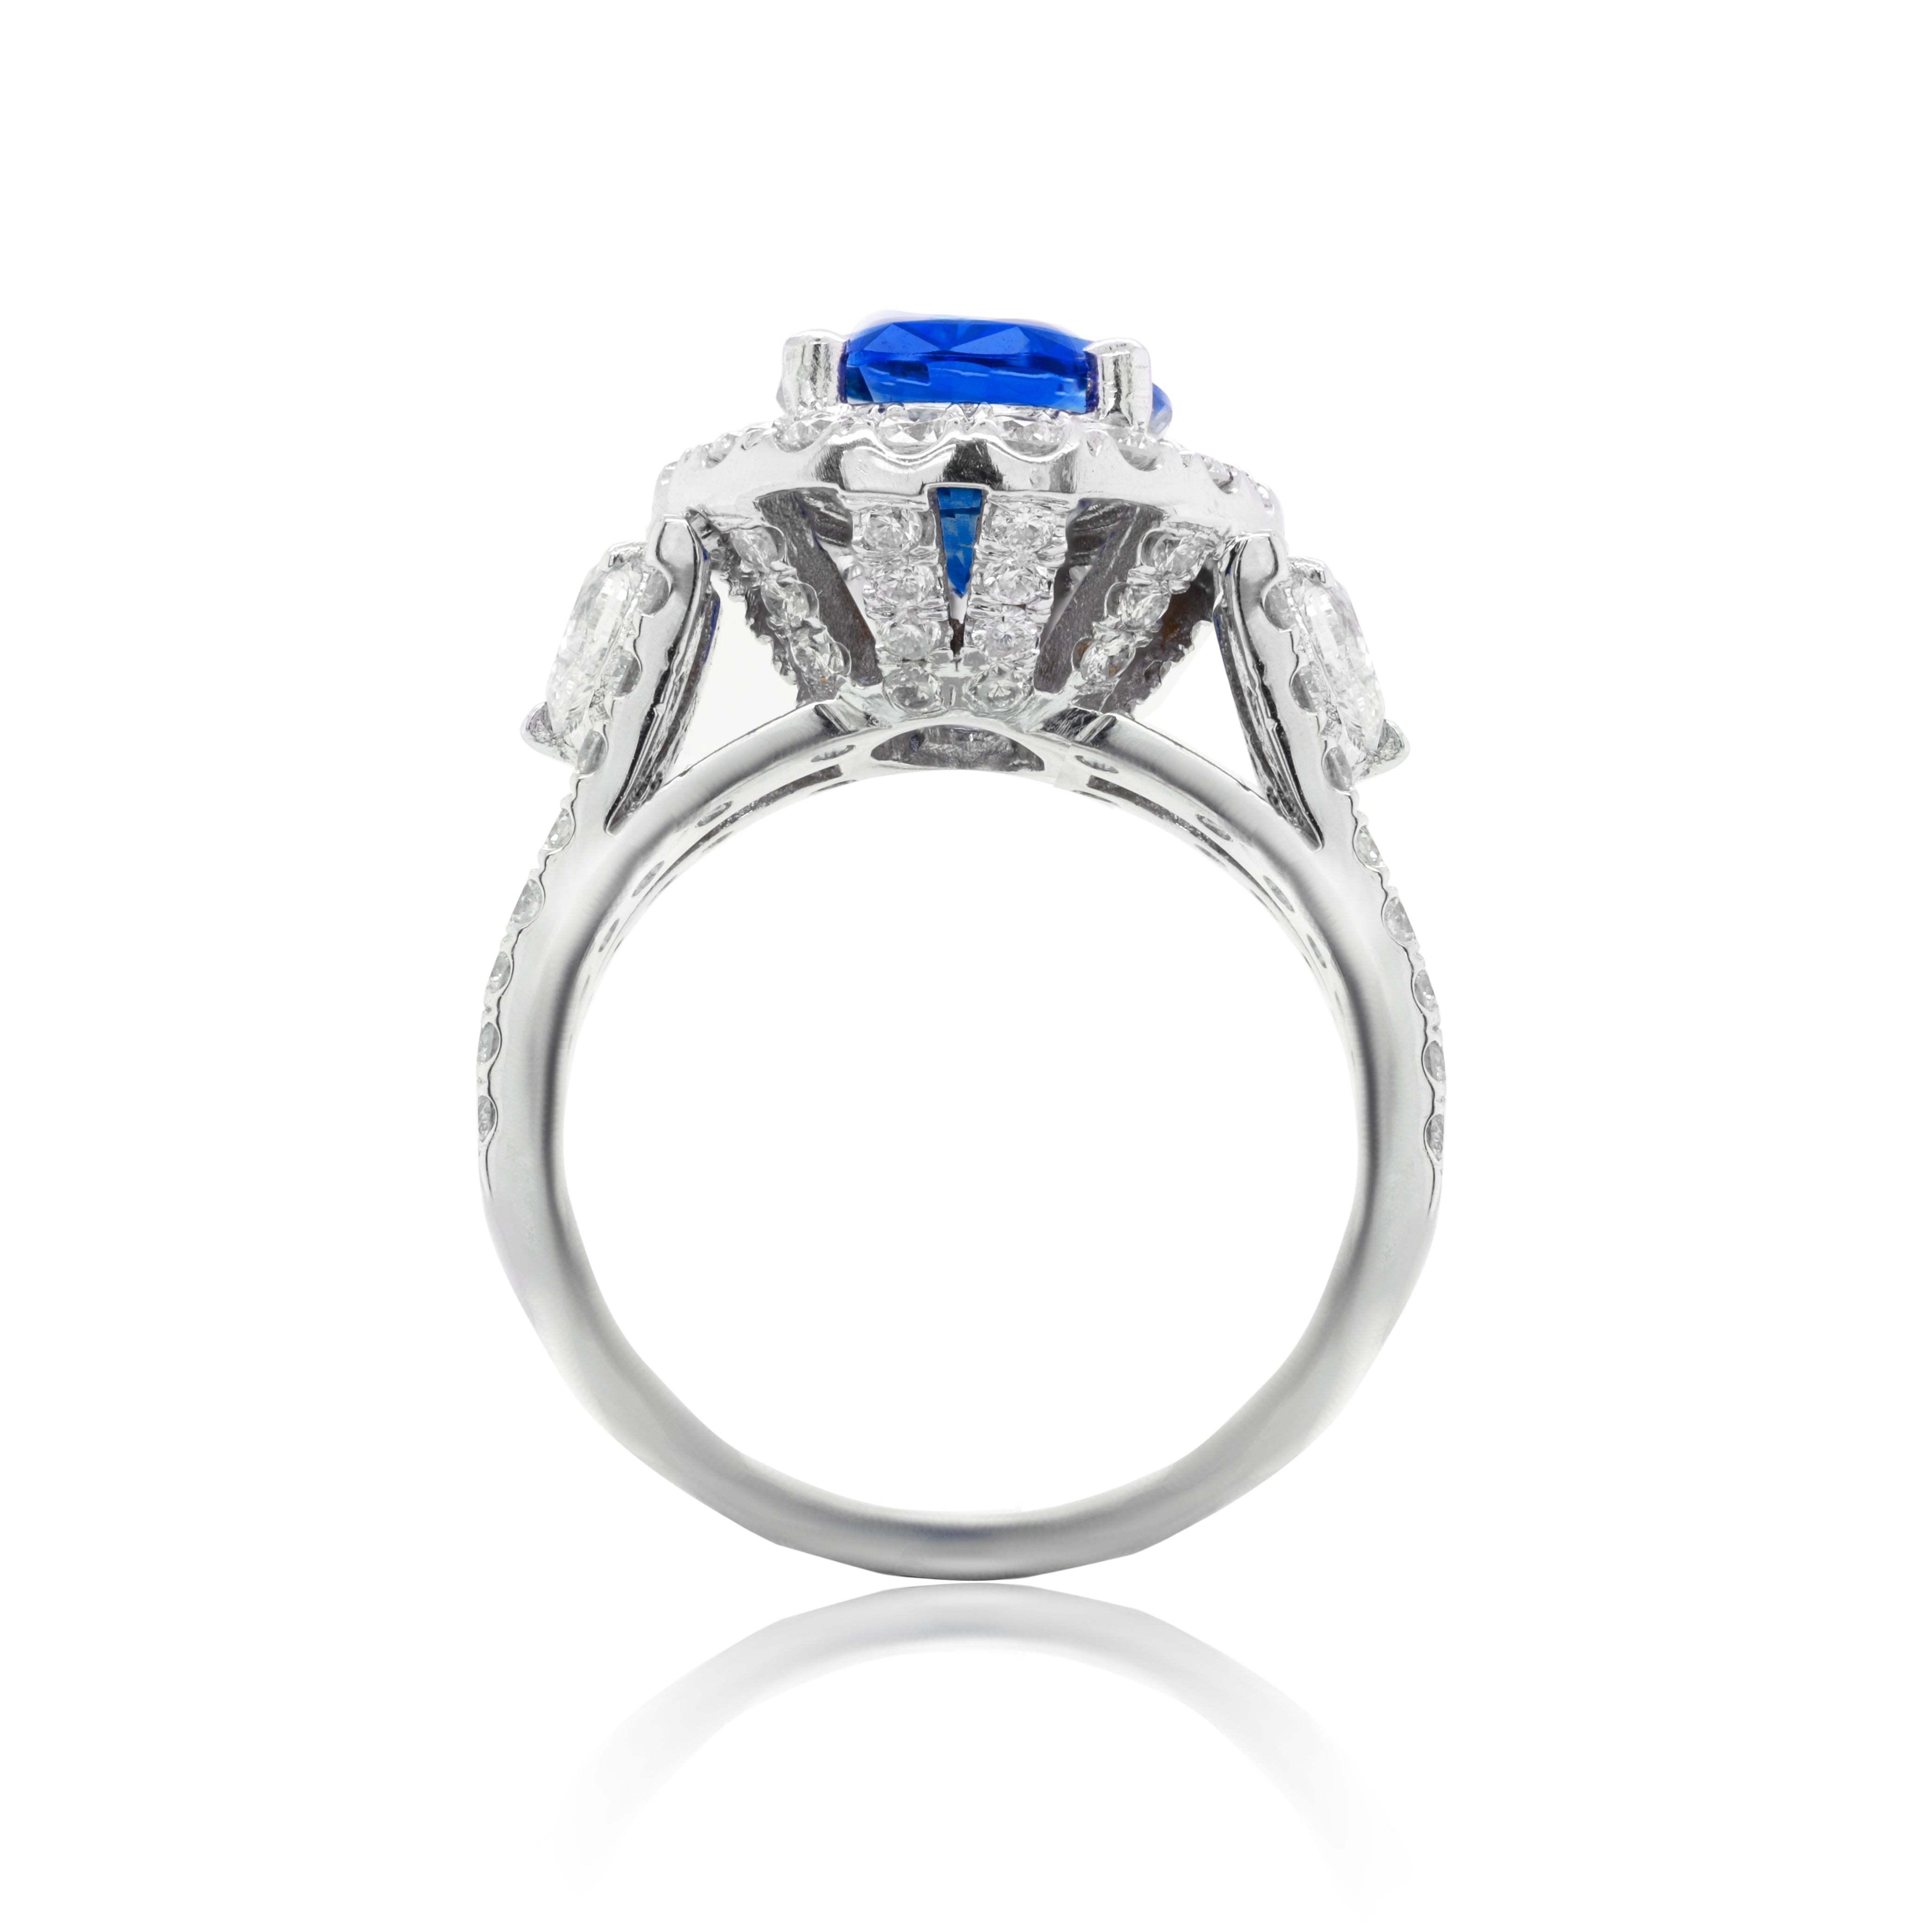 Sapphire Halo Diamond Ring